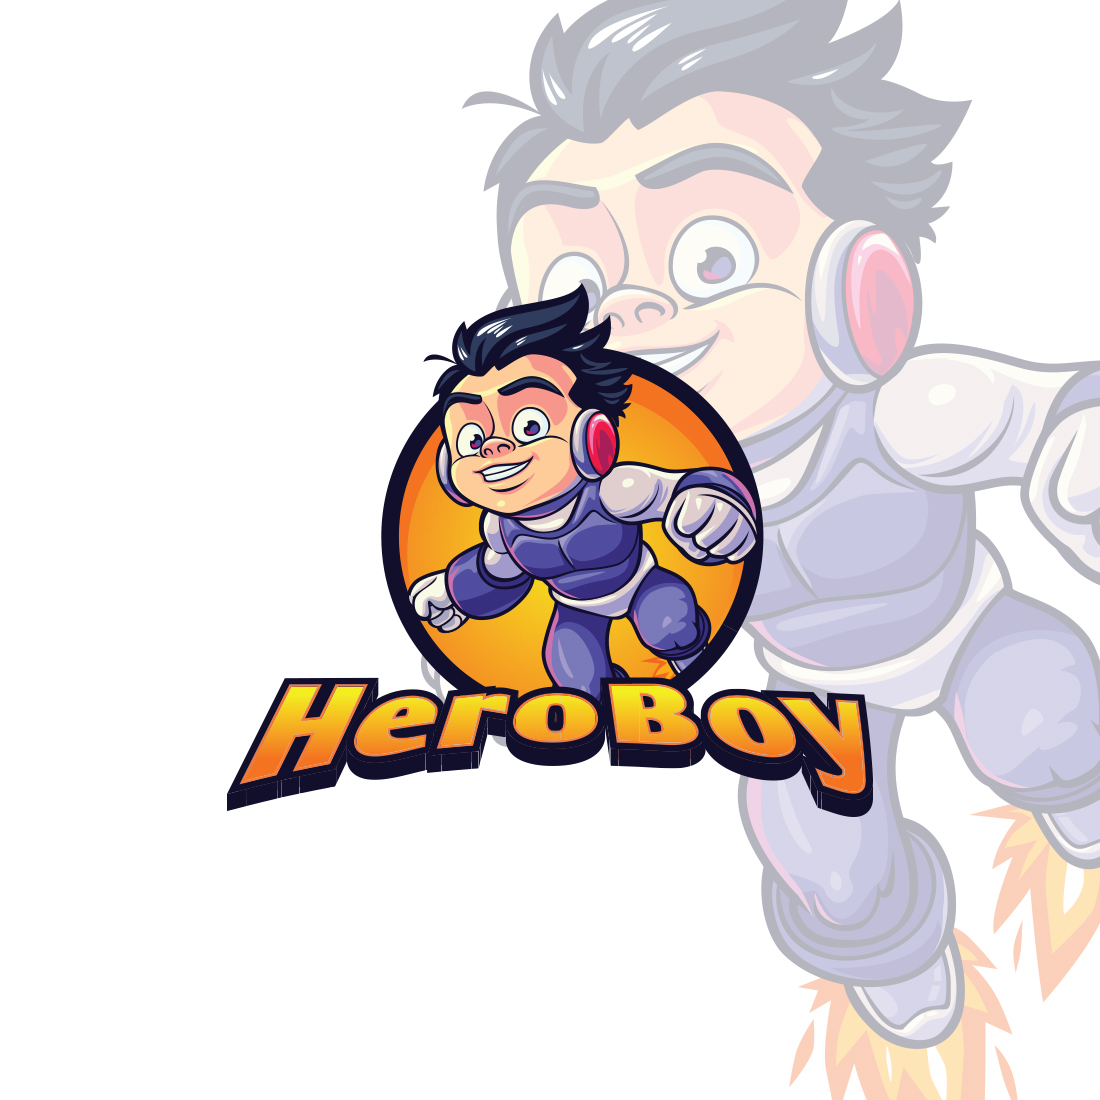 Hero Boy Character Mascot Logo Design cover image.